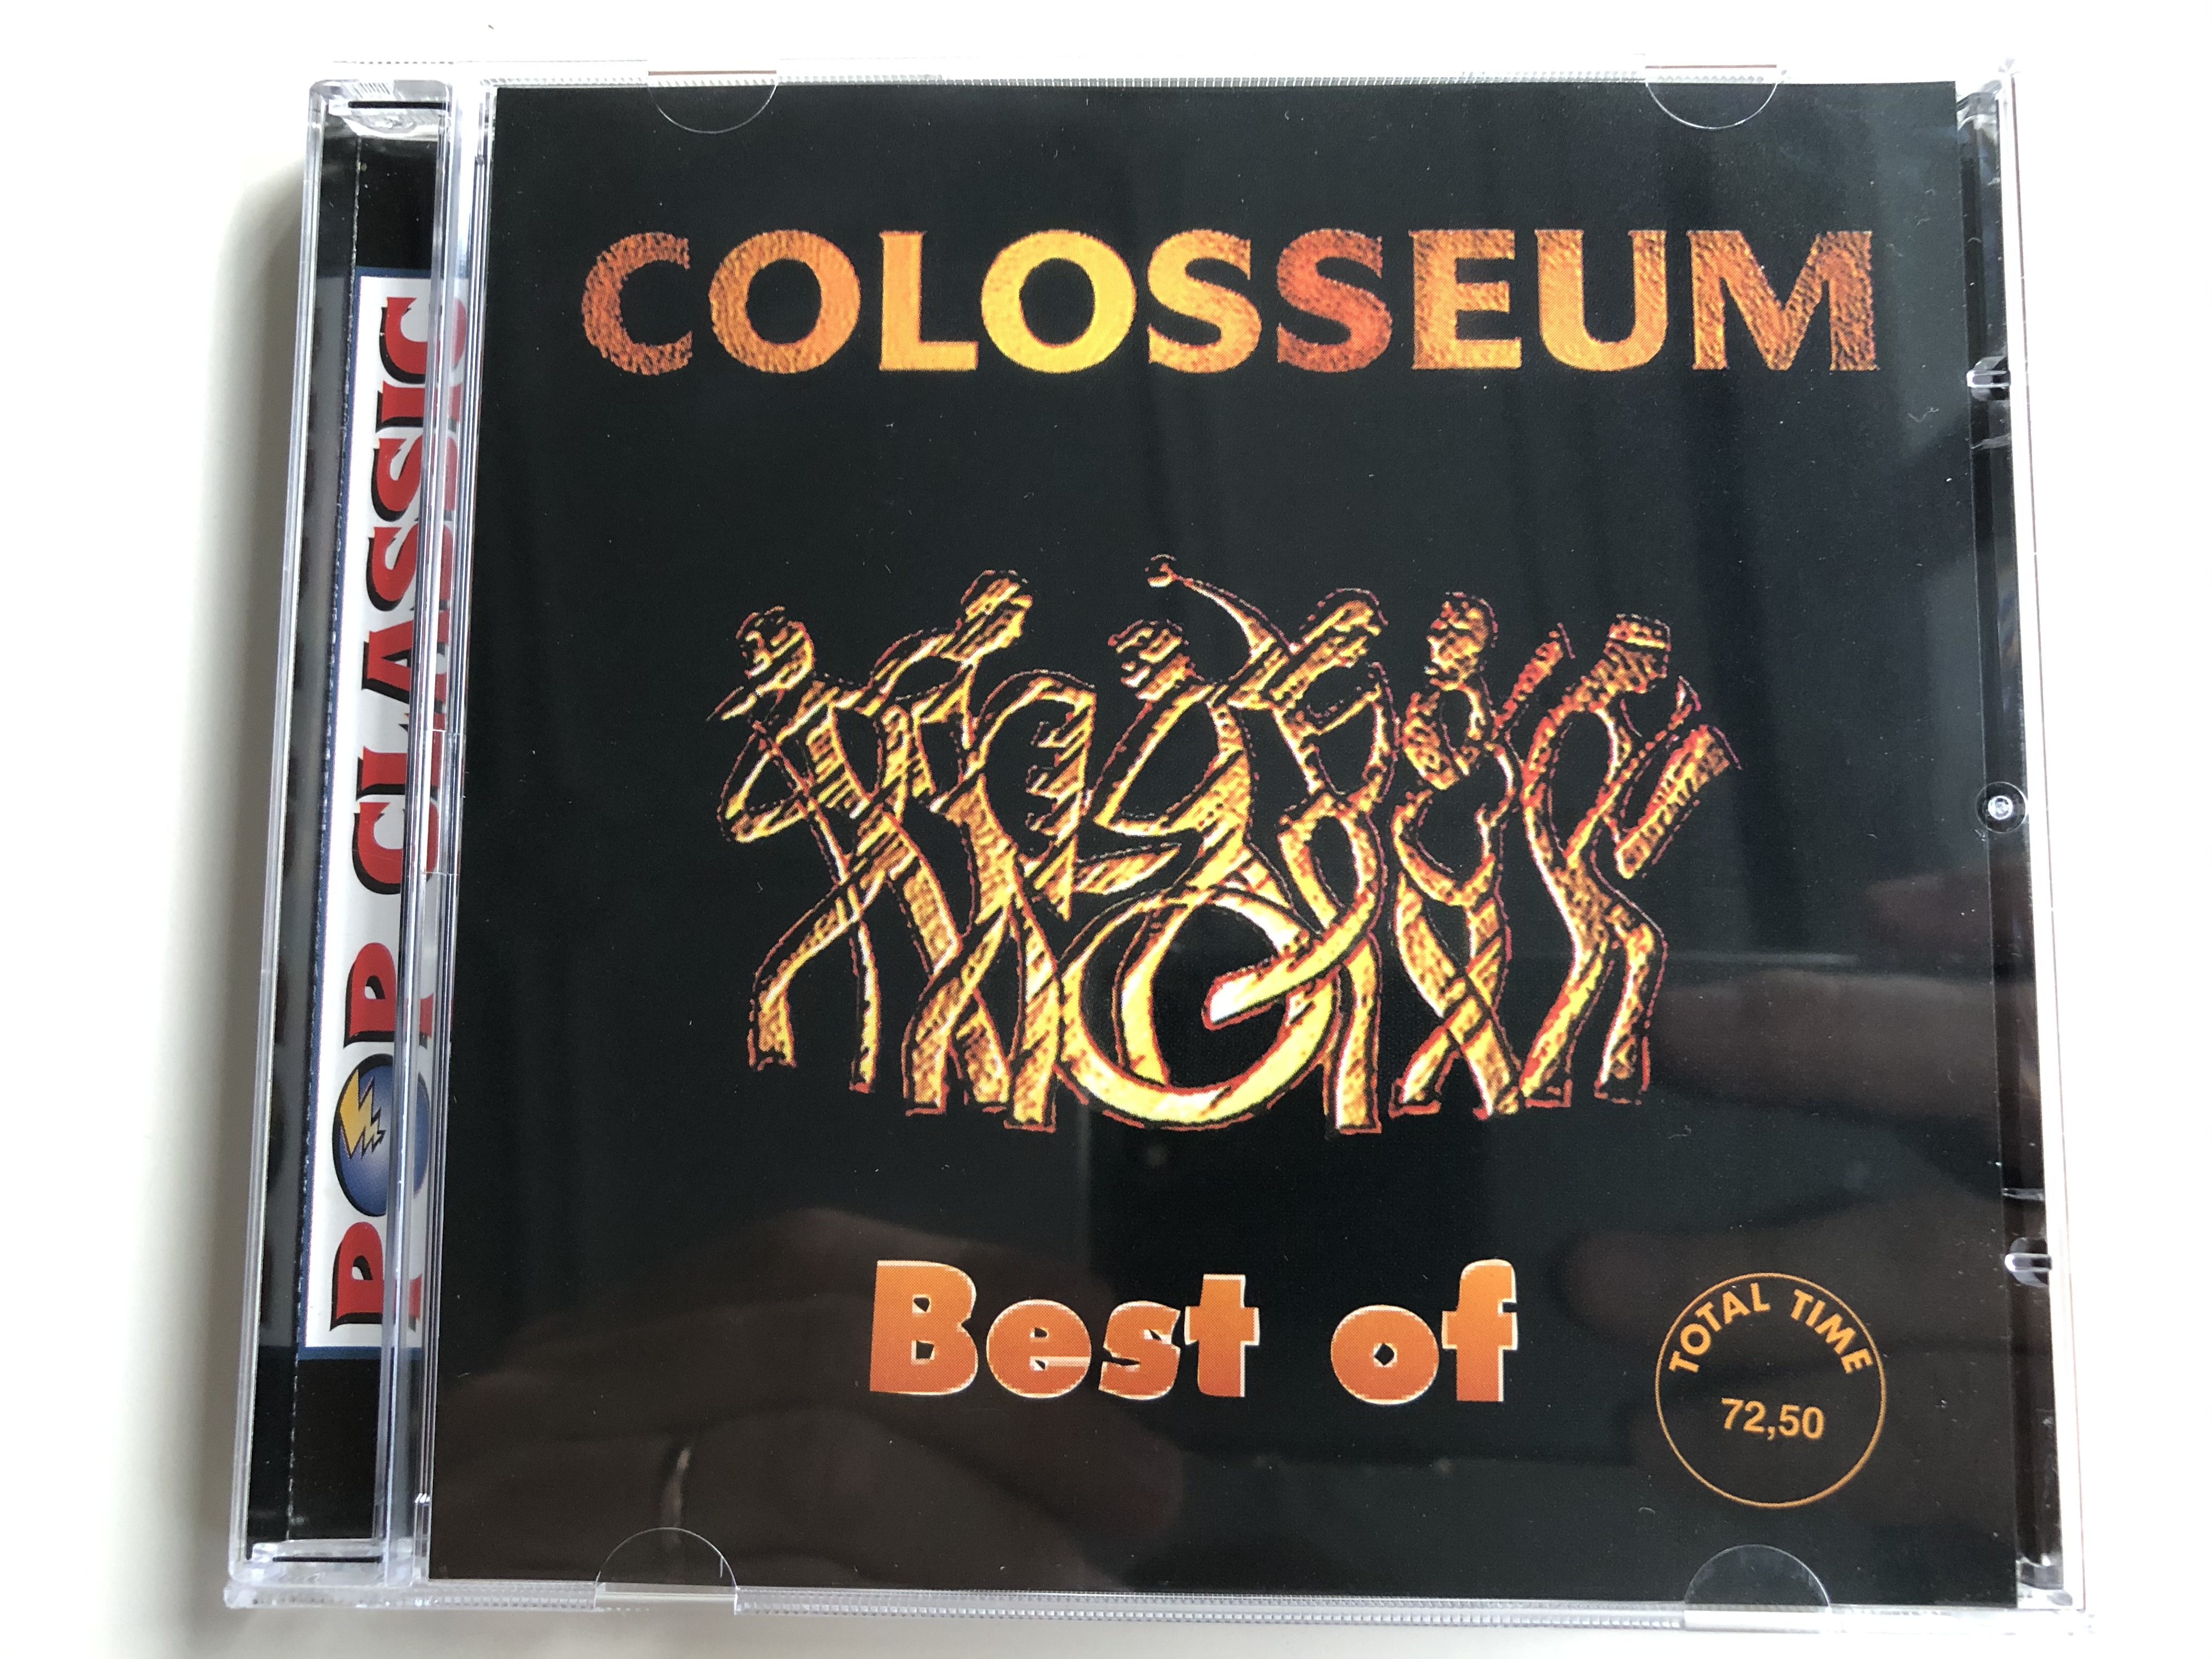 colosseum-best-of-total-time-72-50-pop-classic-euroton-audio-cd-eucd-0073-1-.jpg